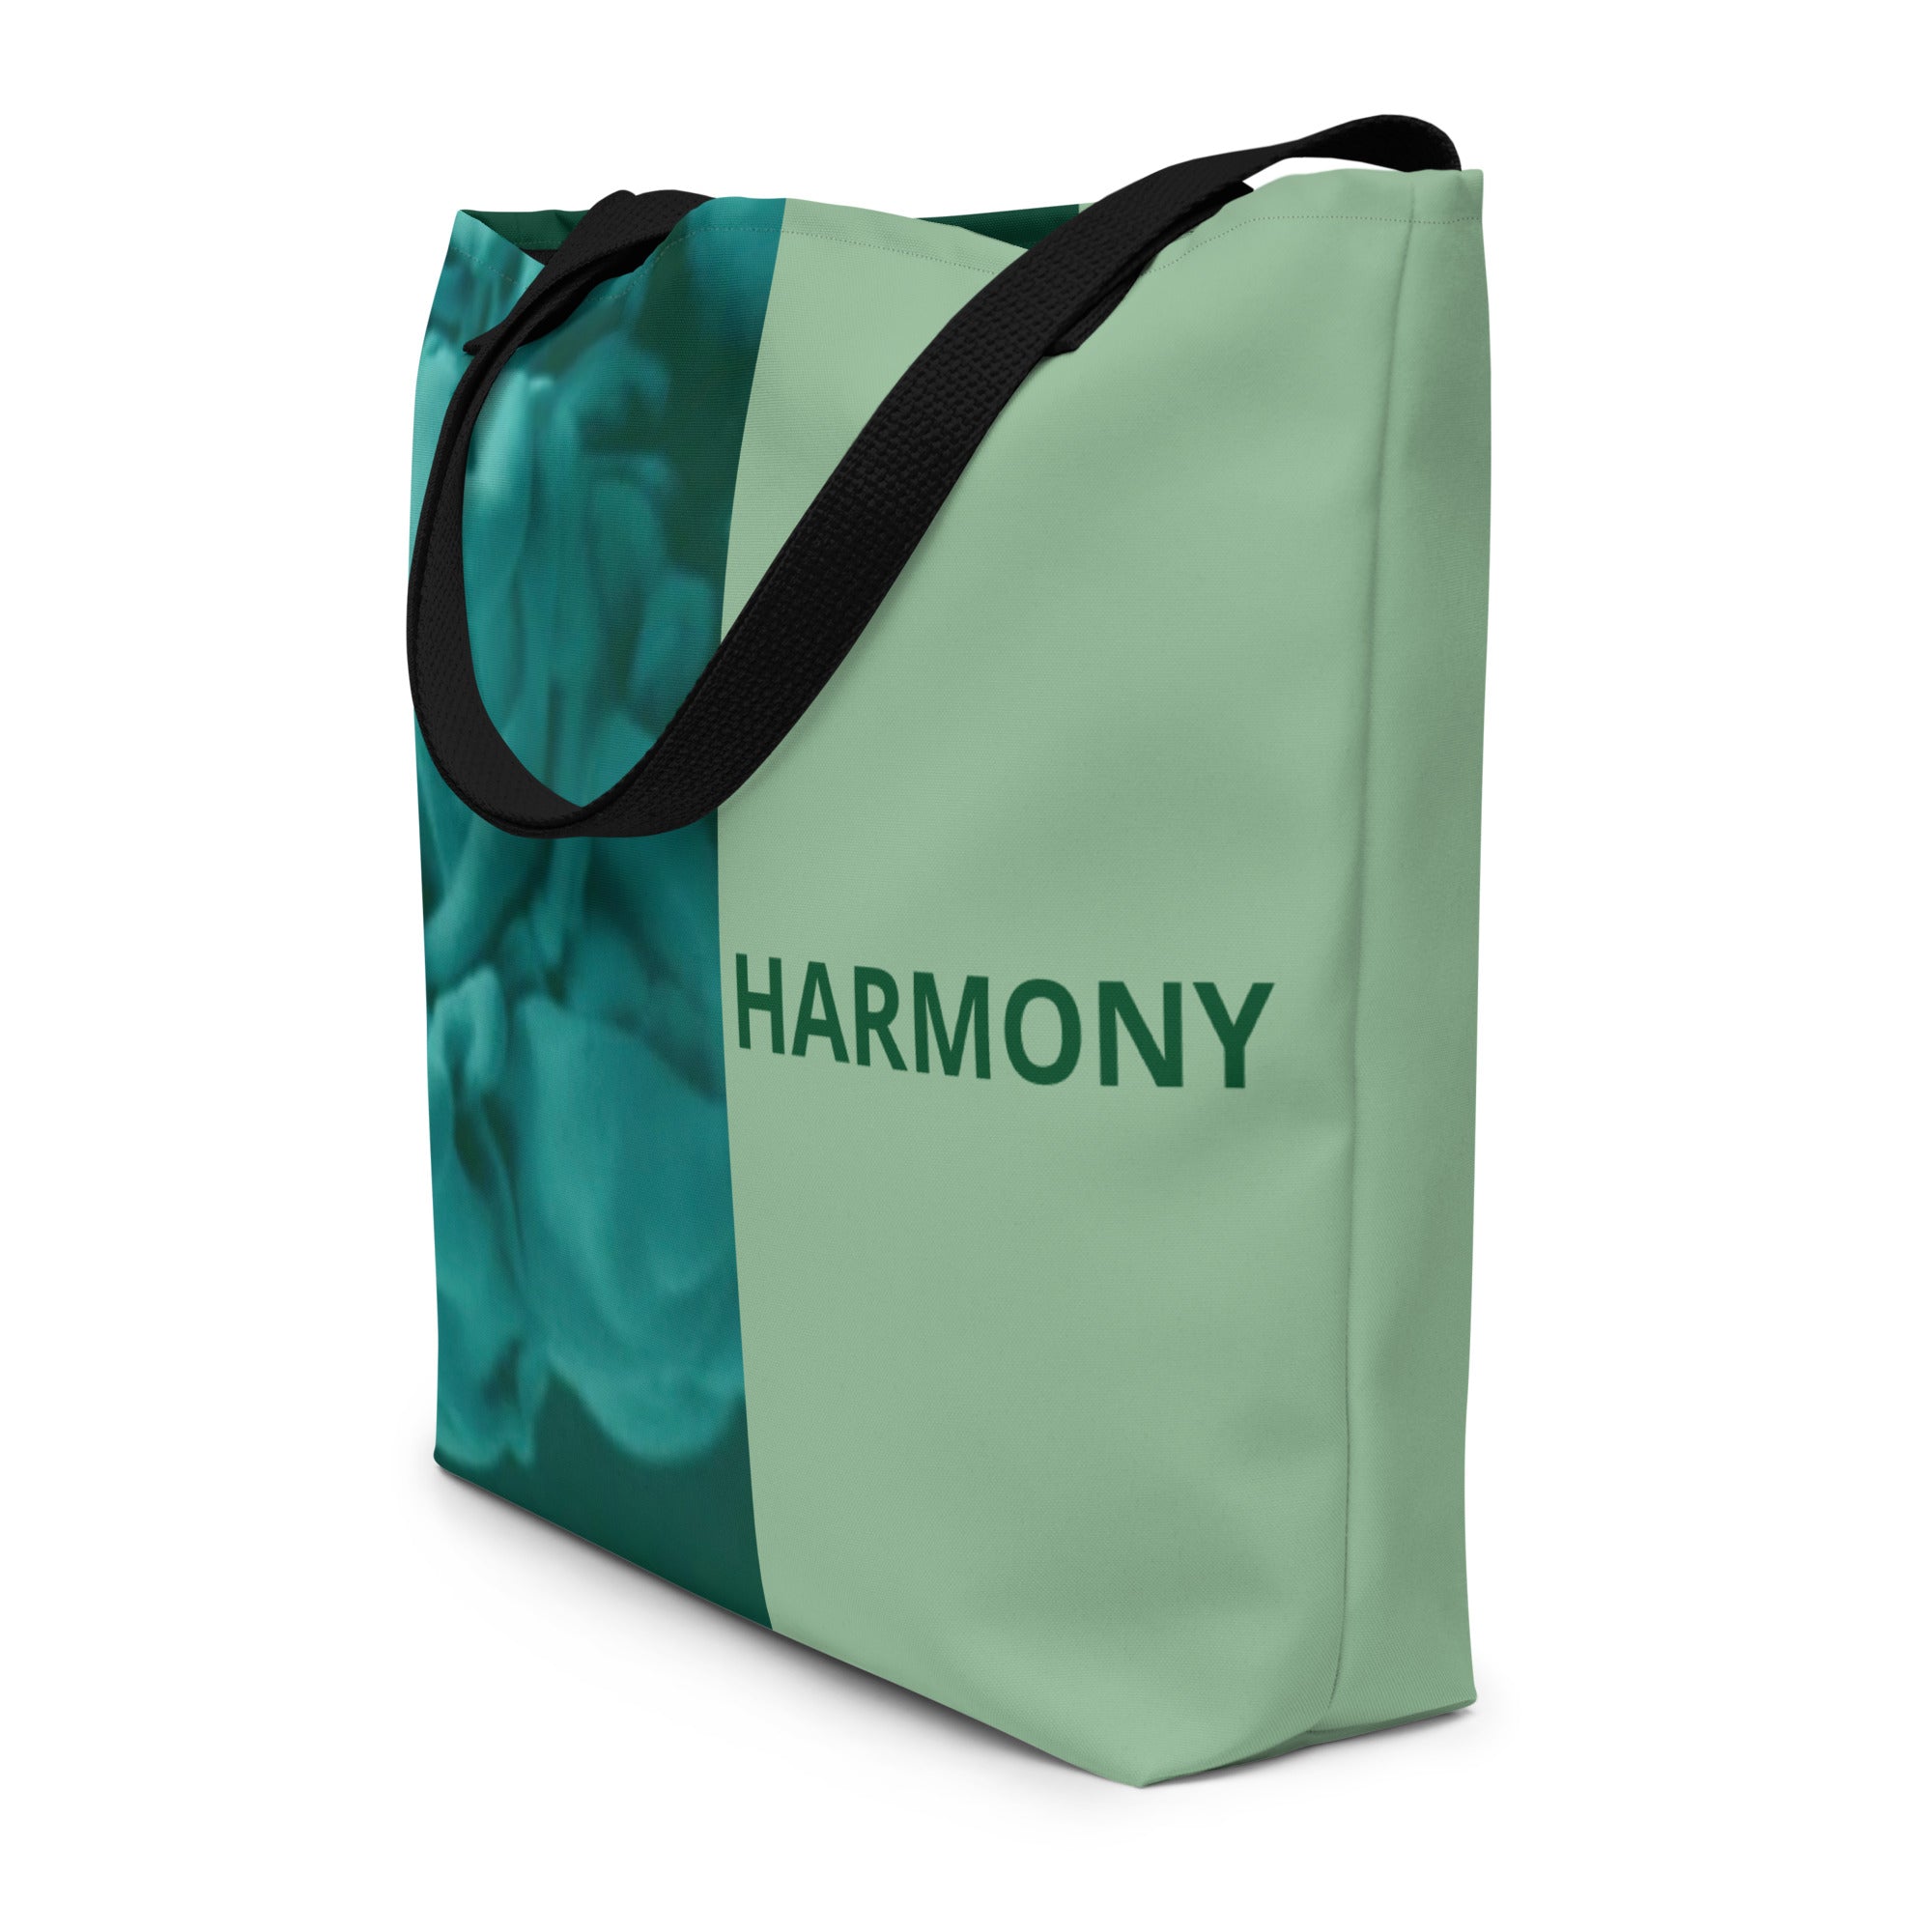 Harmony Large Tote Bag